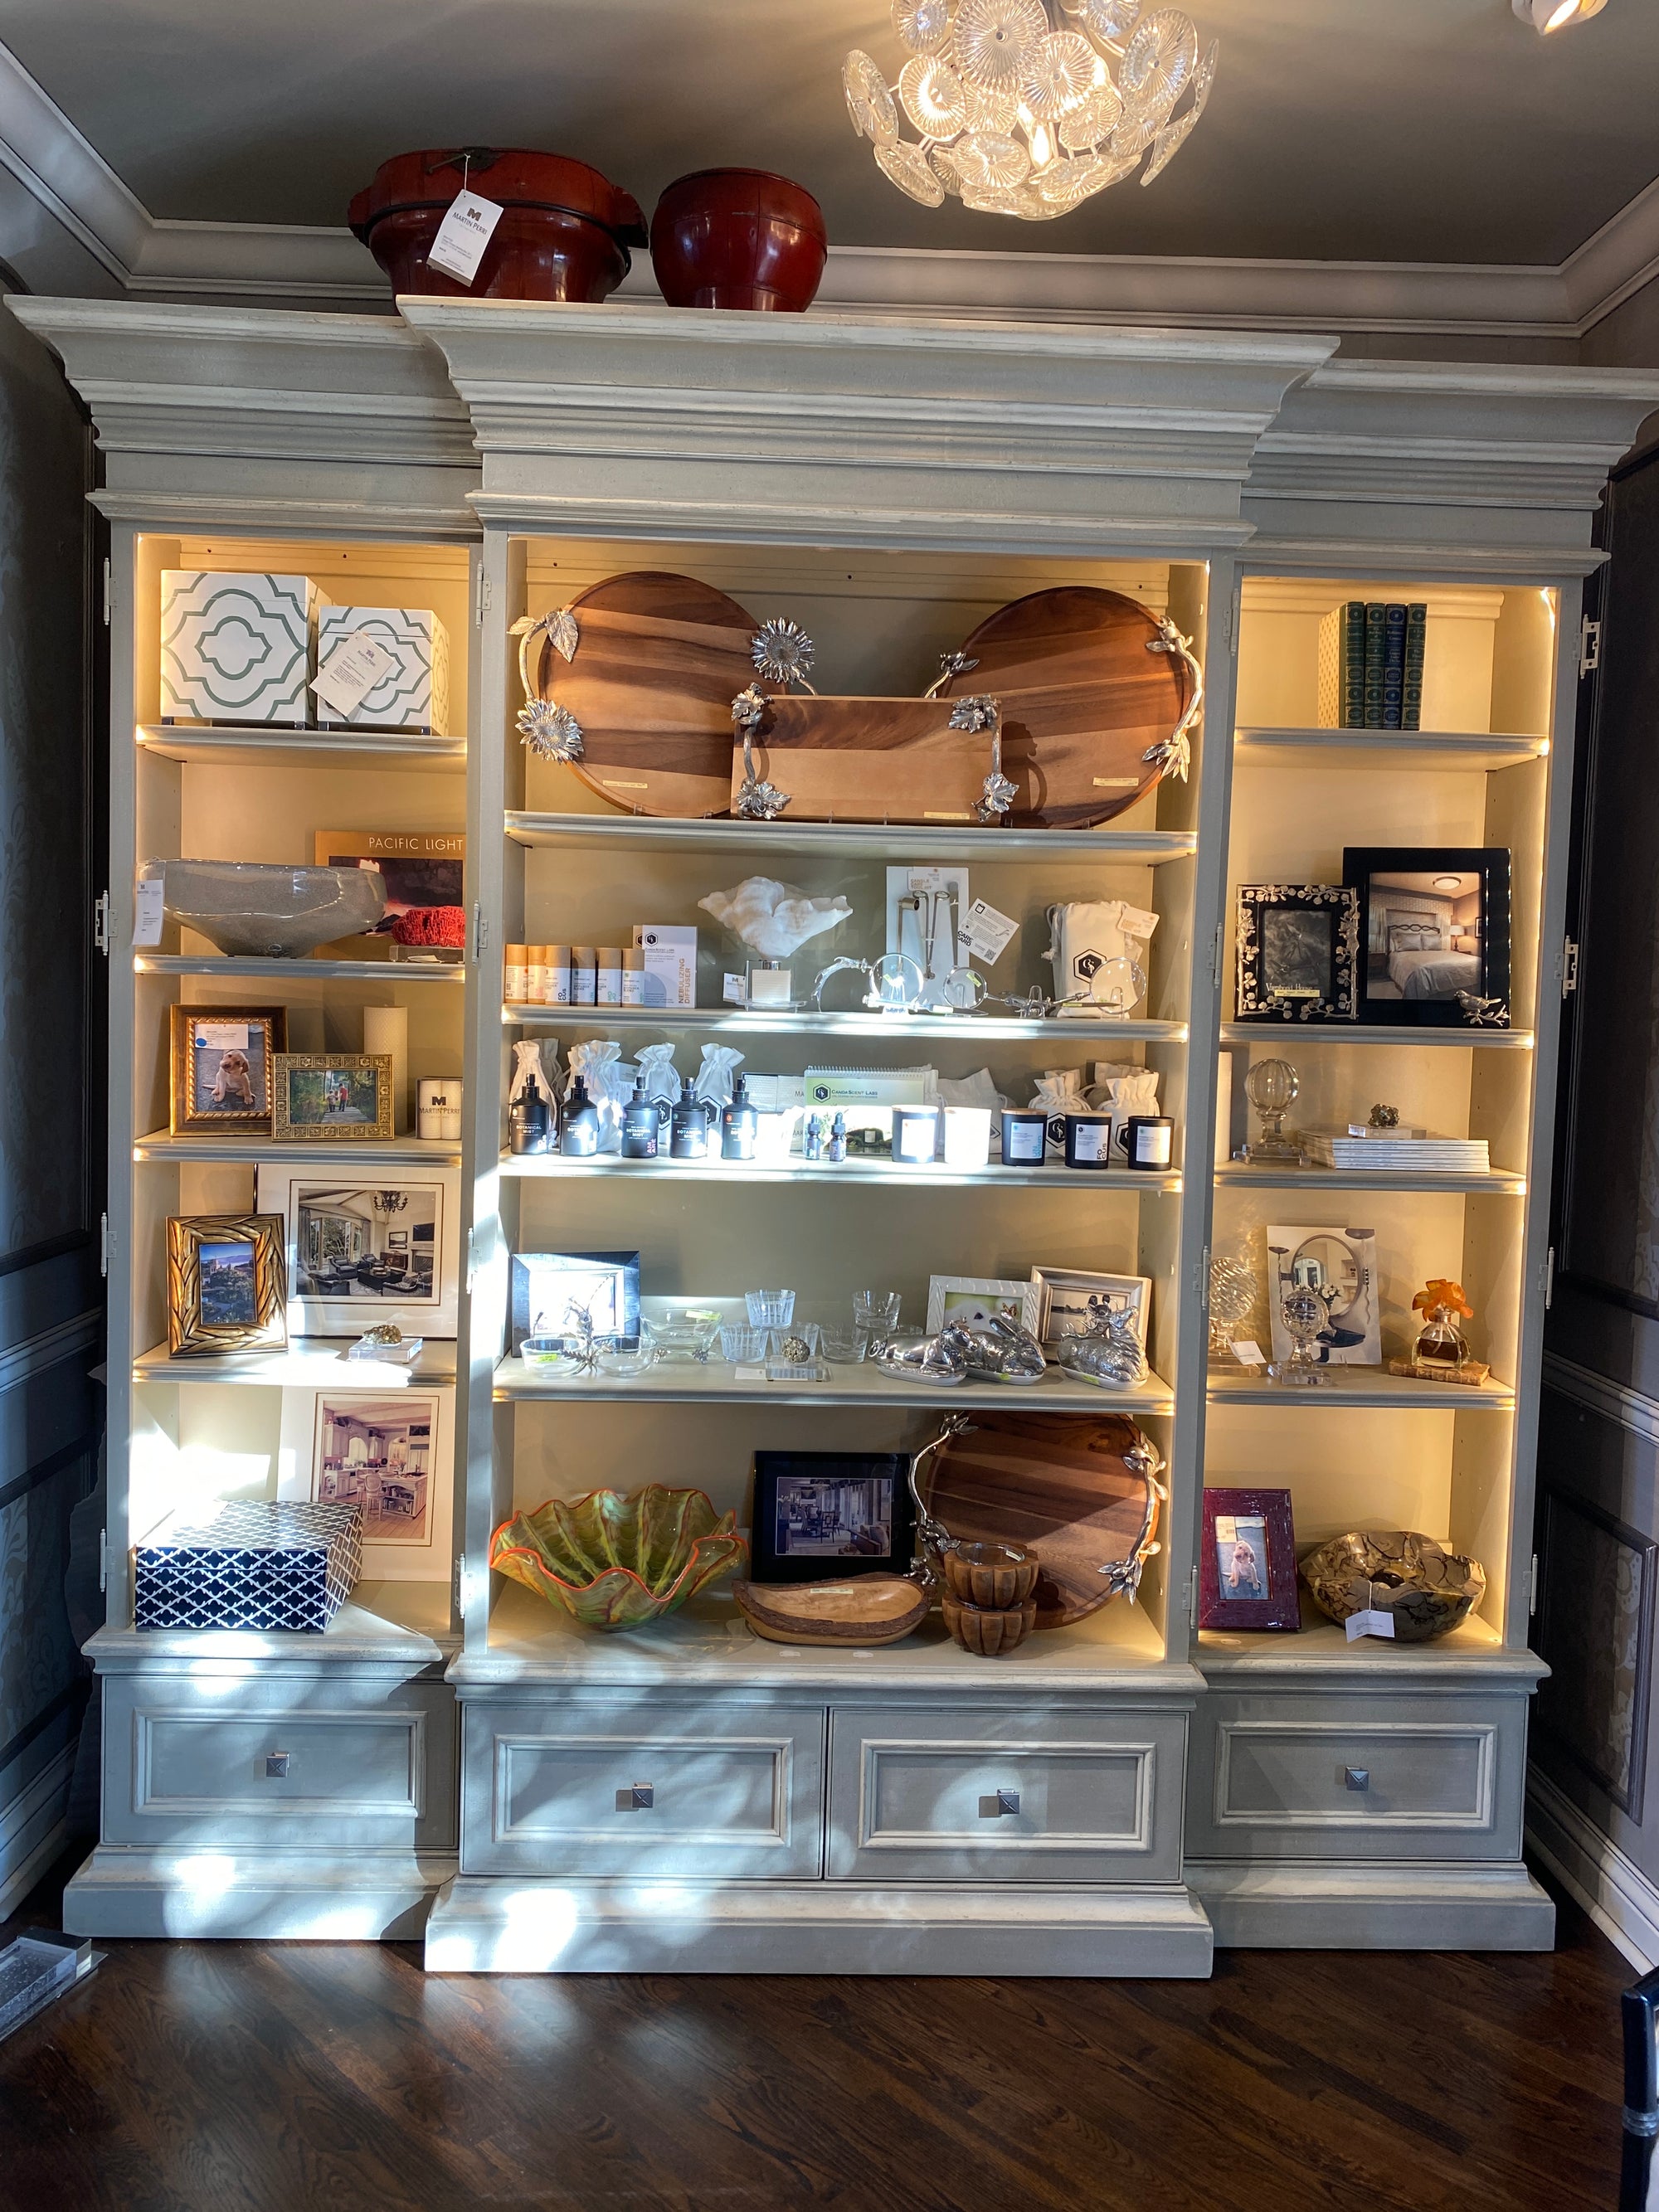 Habersham Bookcase Cabinet Or Retail